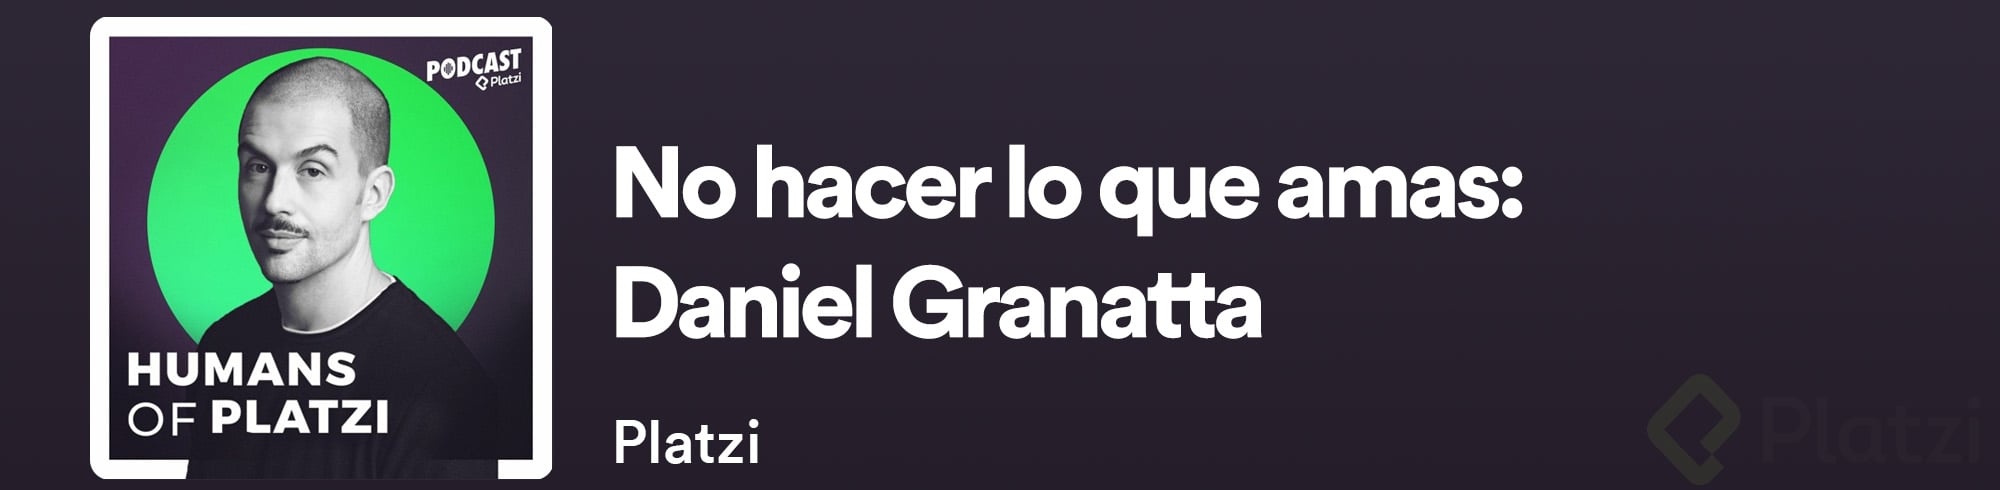 Daniel Granatta